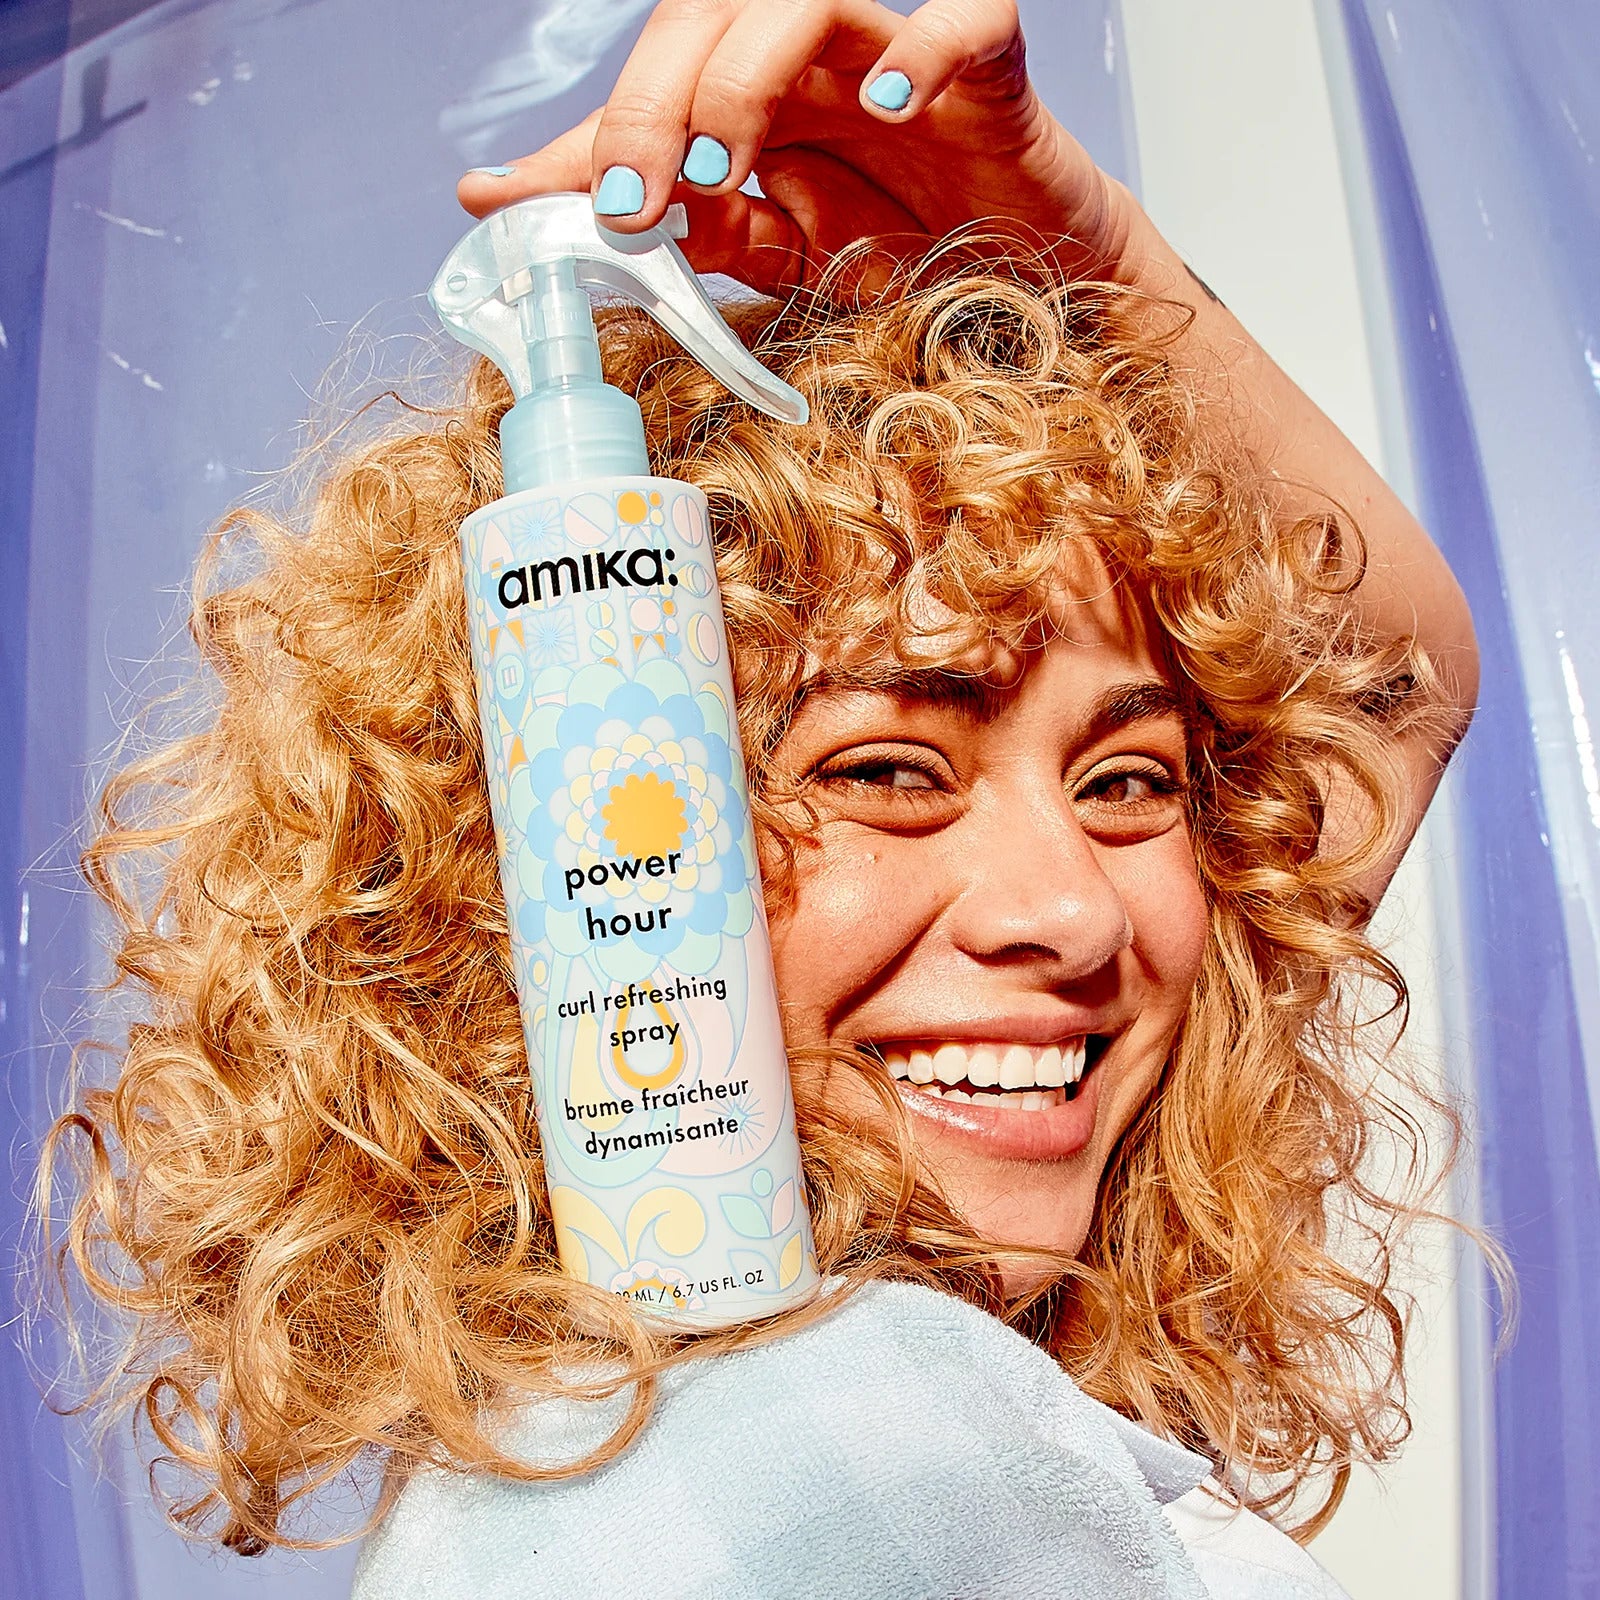 Hair refreshing spray by Amika (Power Hour Curl Refreshing Spray)